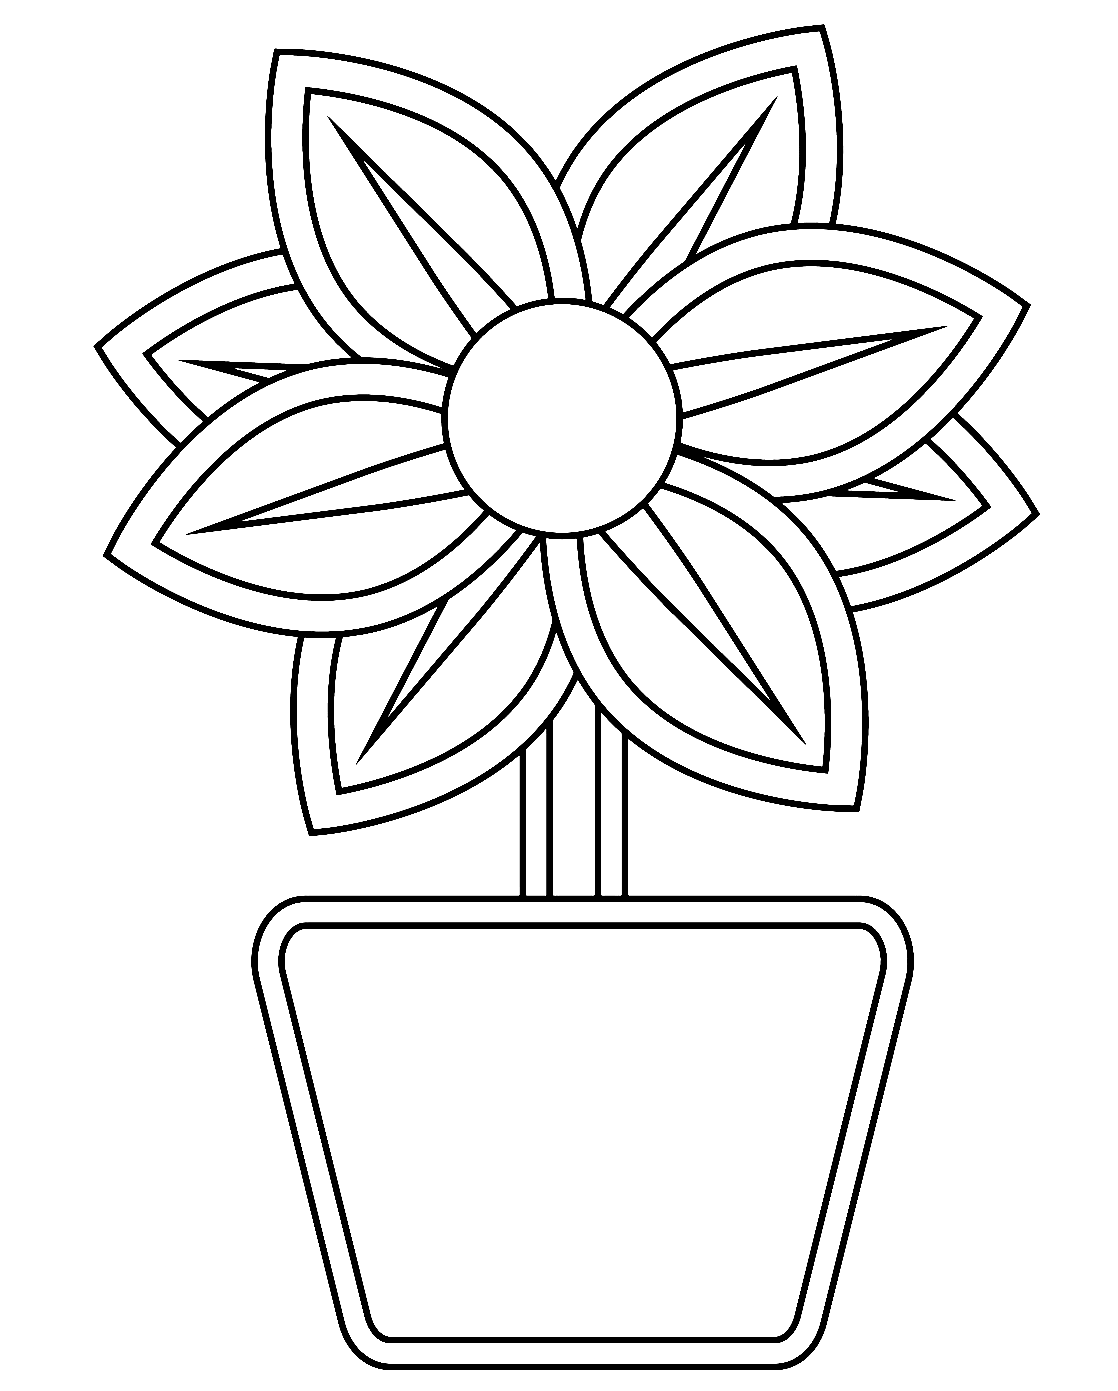 Imagem de vaso de flores de vaso de flores